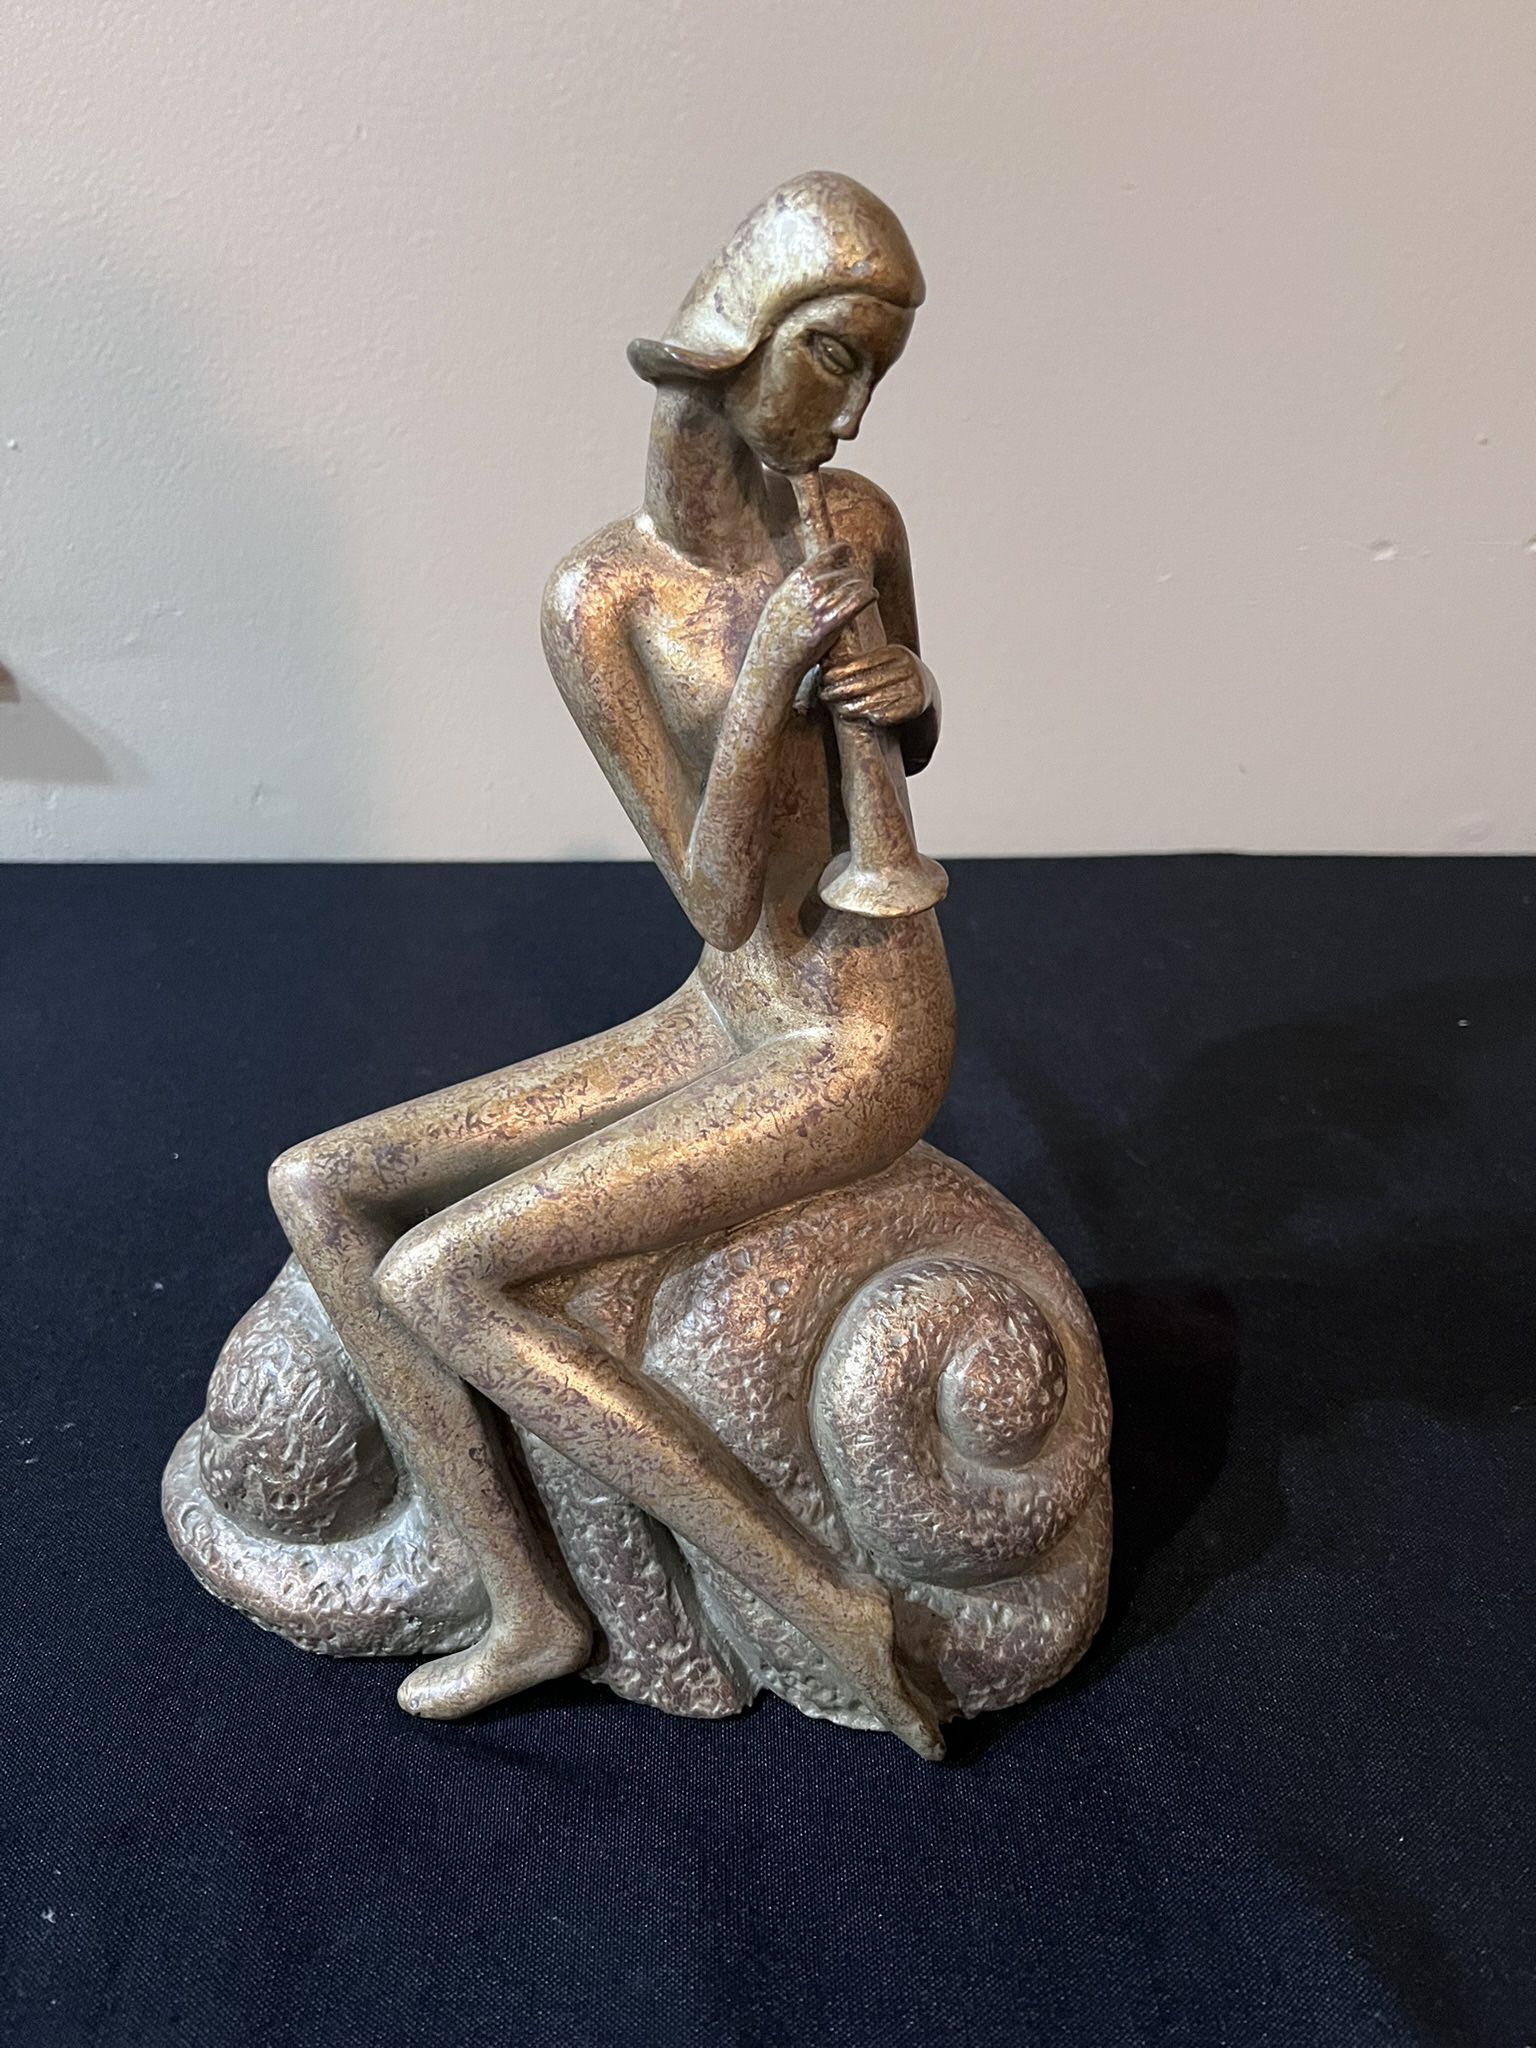 Women Playing Horn Stone Sculpture Figurine 